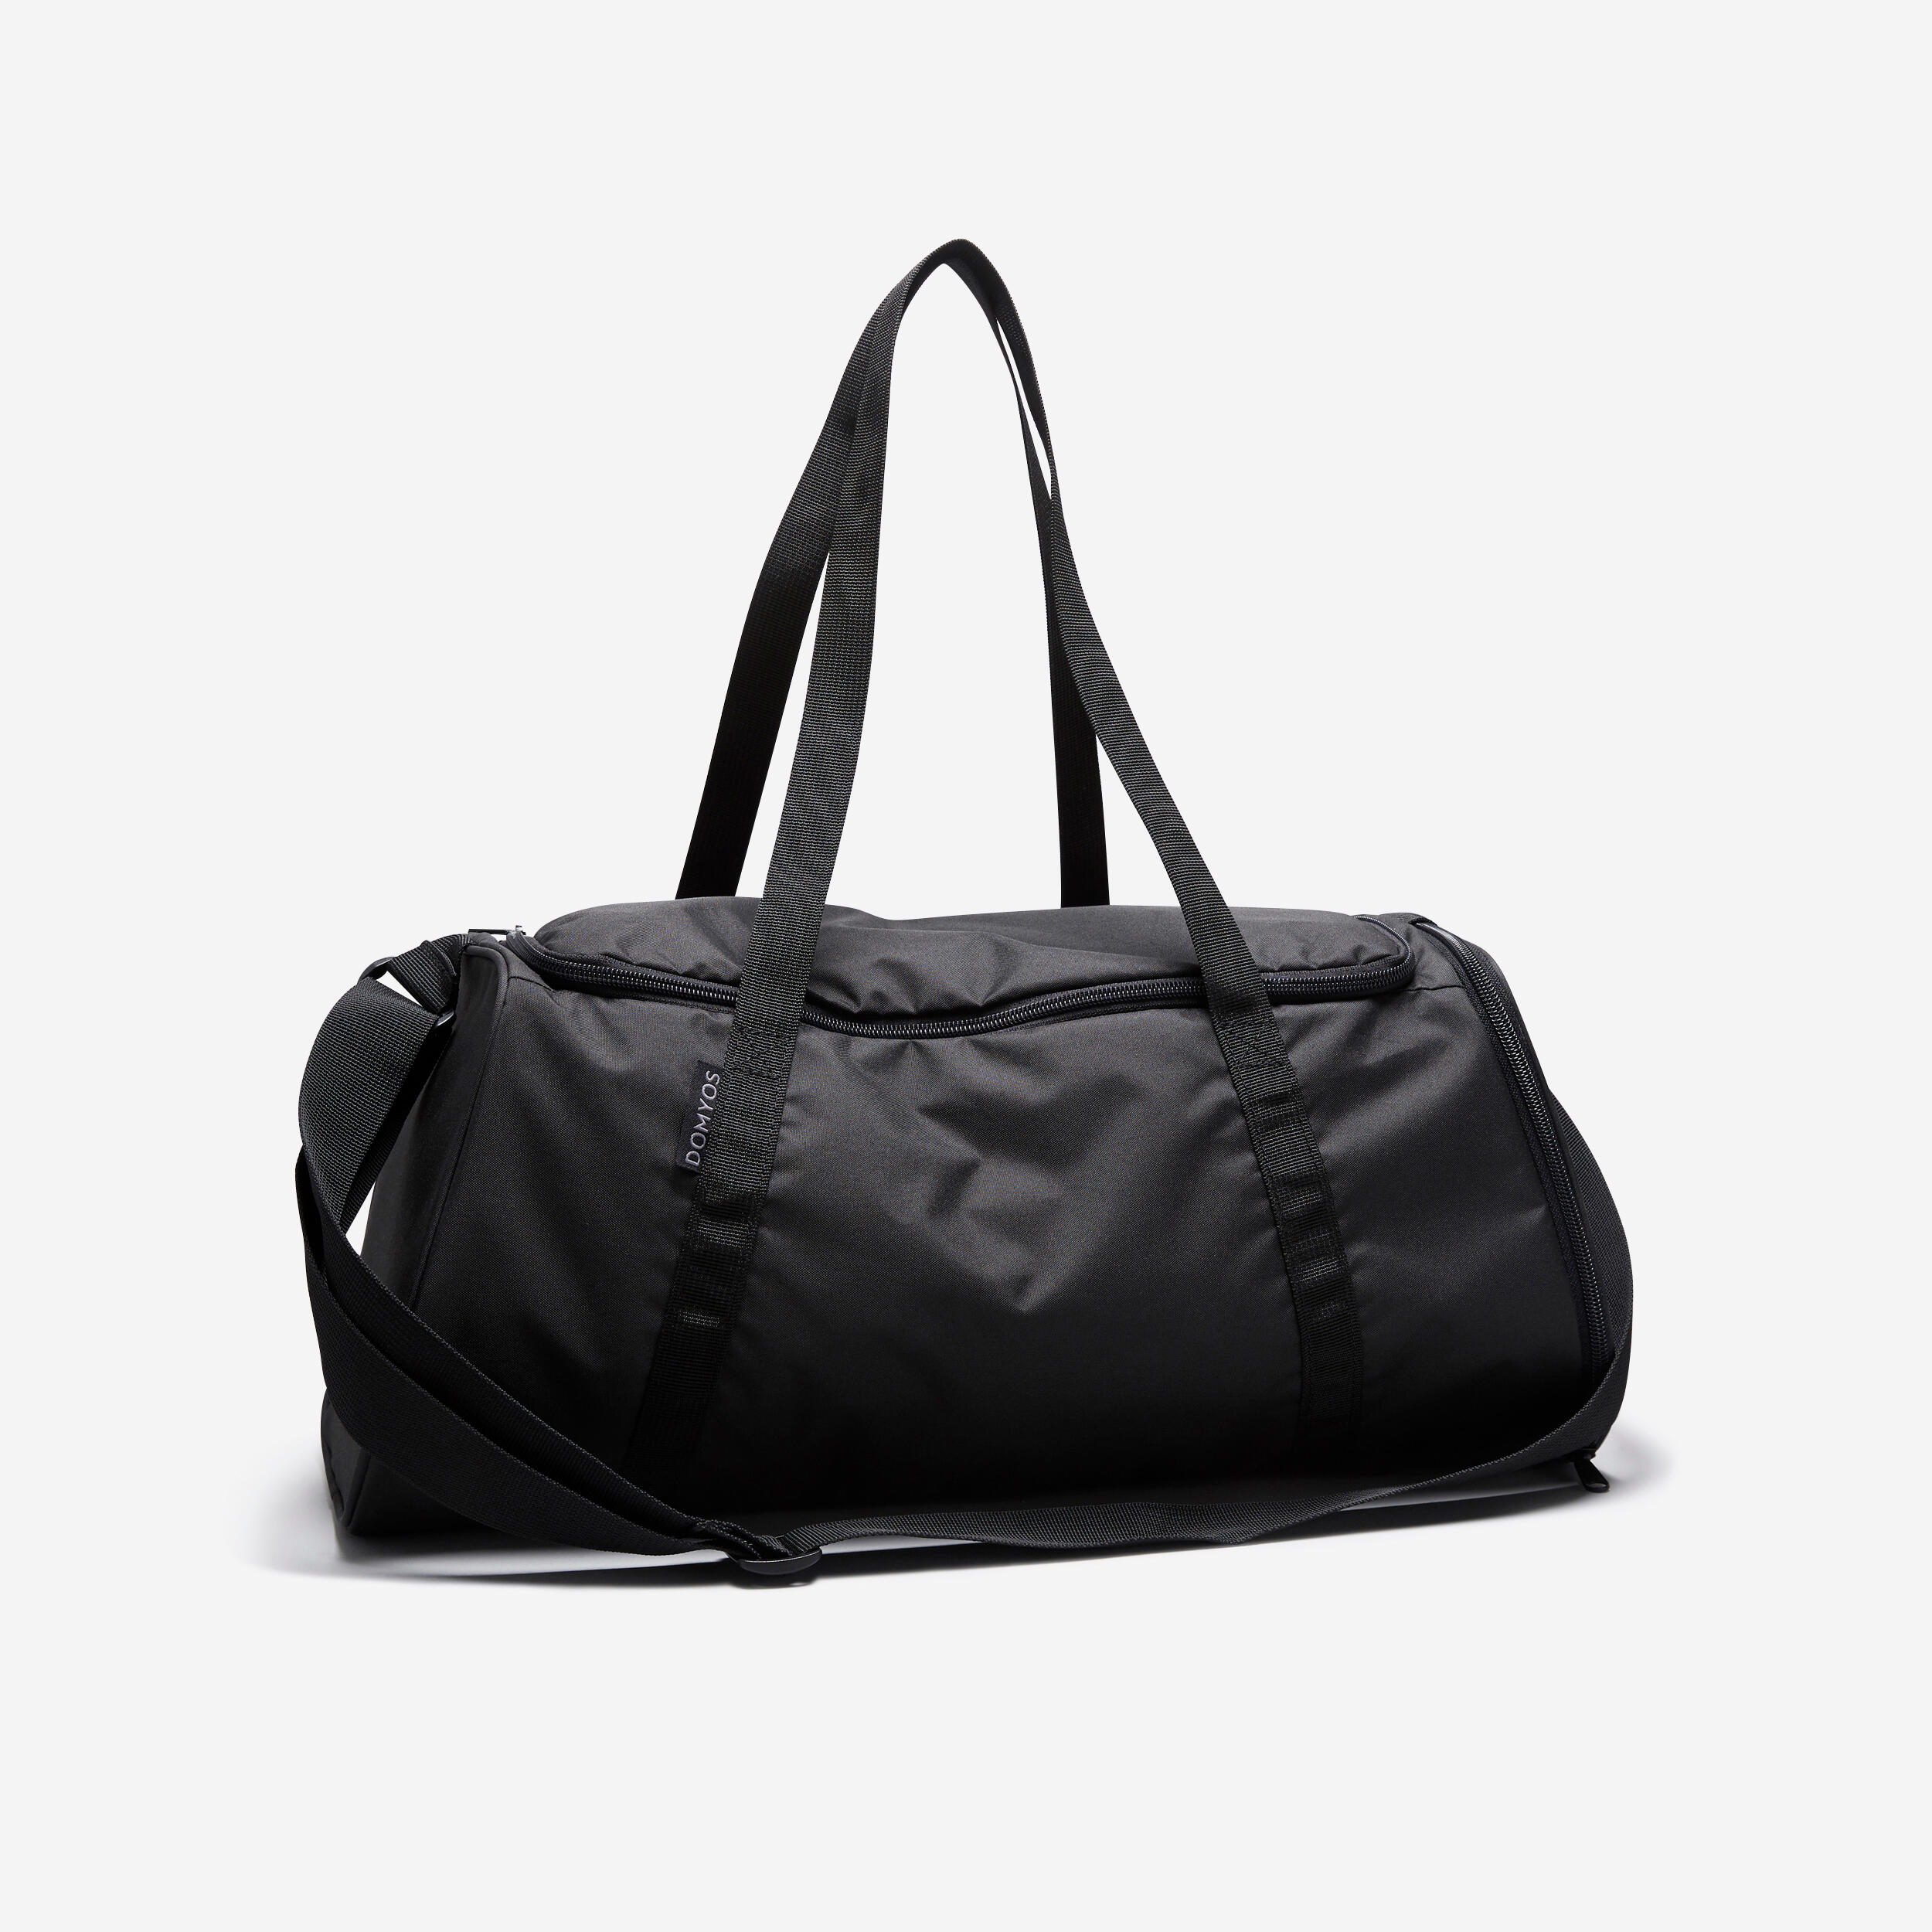 DOMYOS Fitness Bag 20L - Black